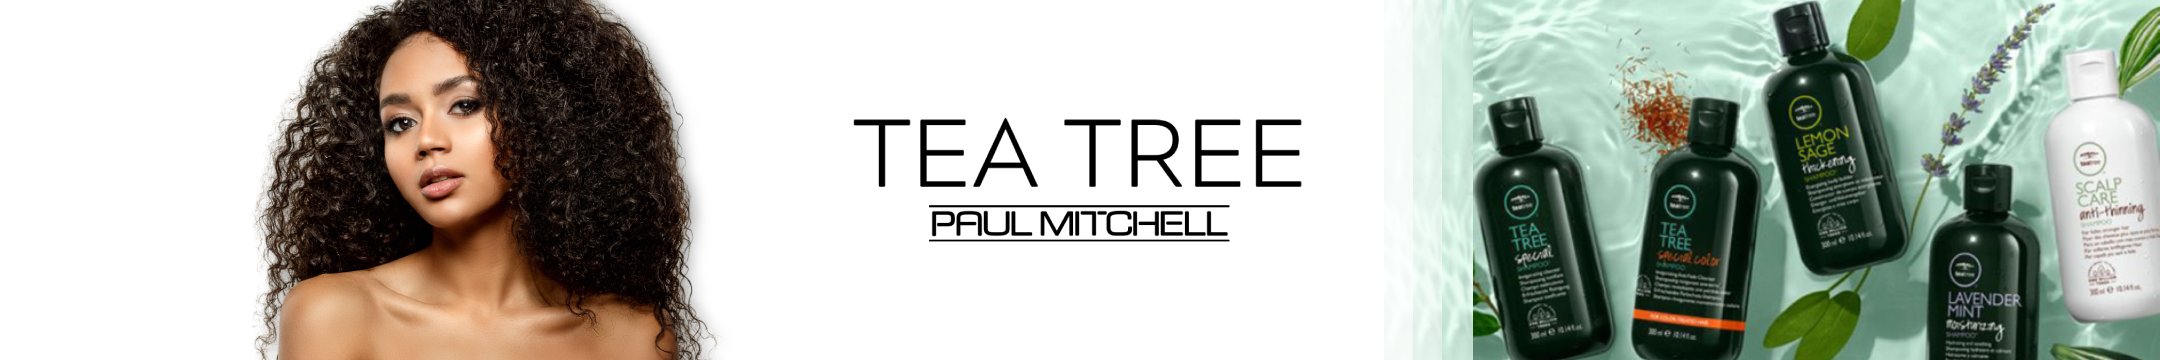 Tea tree by Paul Mitchell shop at comebackdude.com